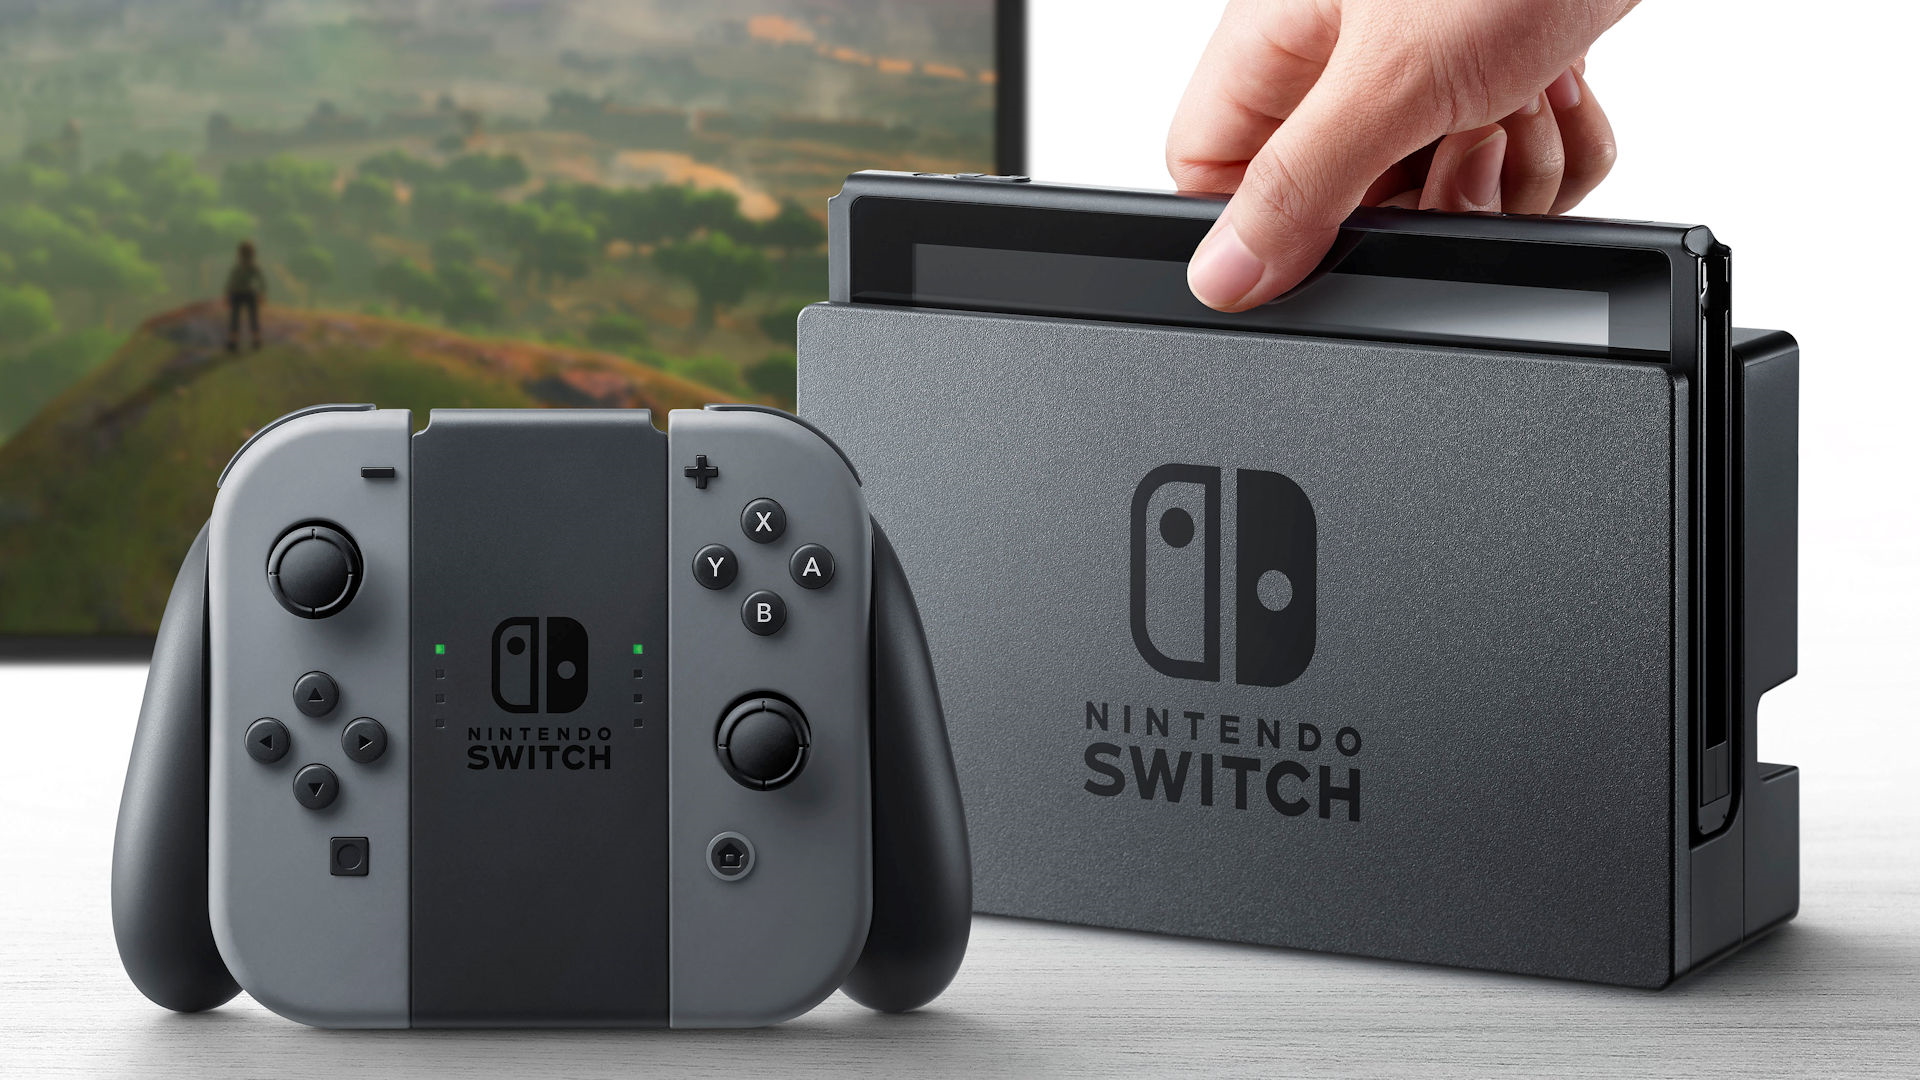 The Nintendo Switch hybrid console